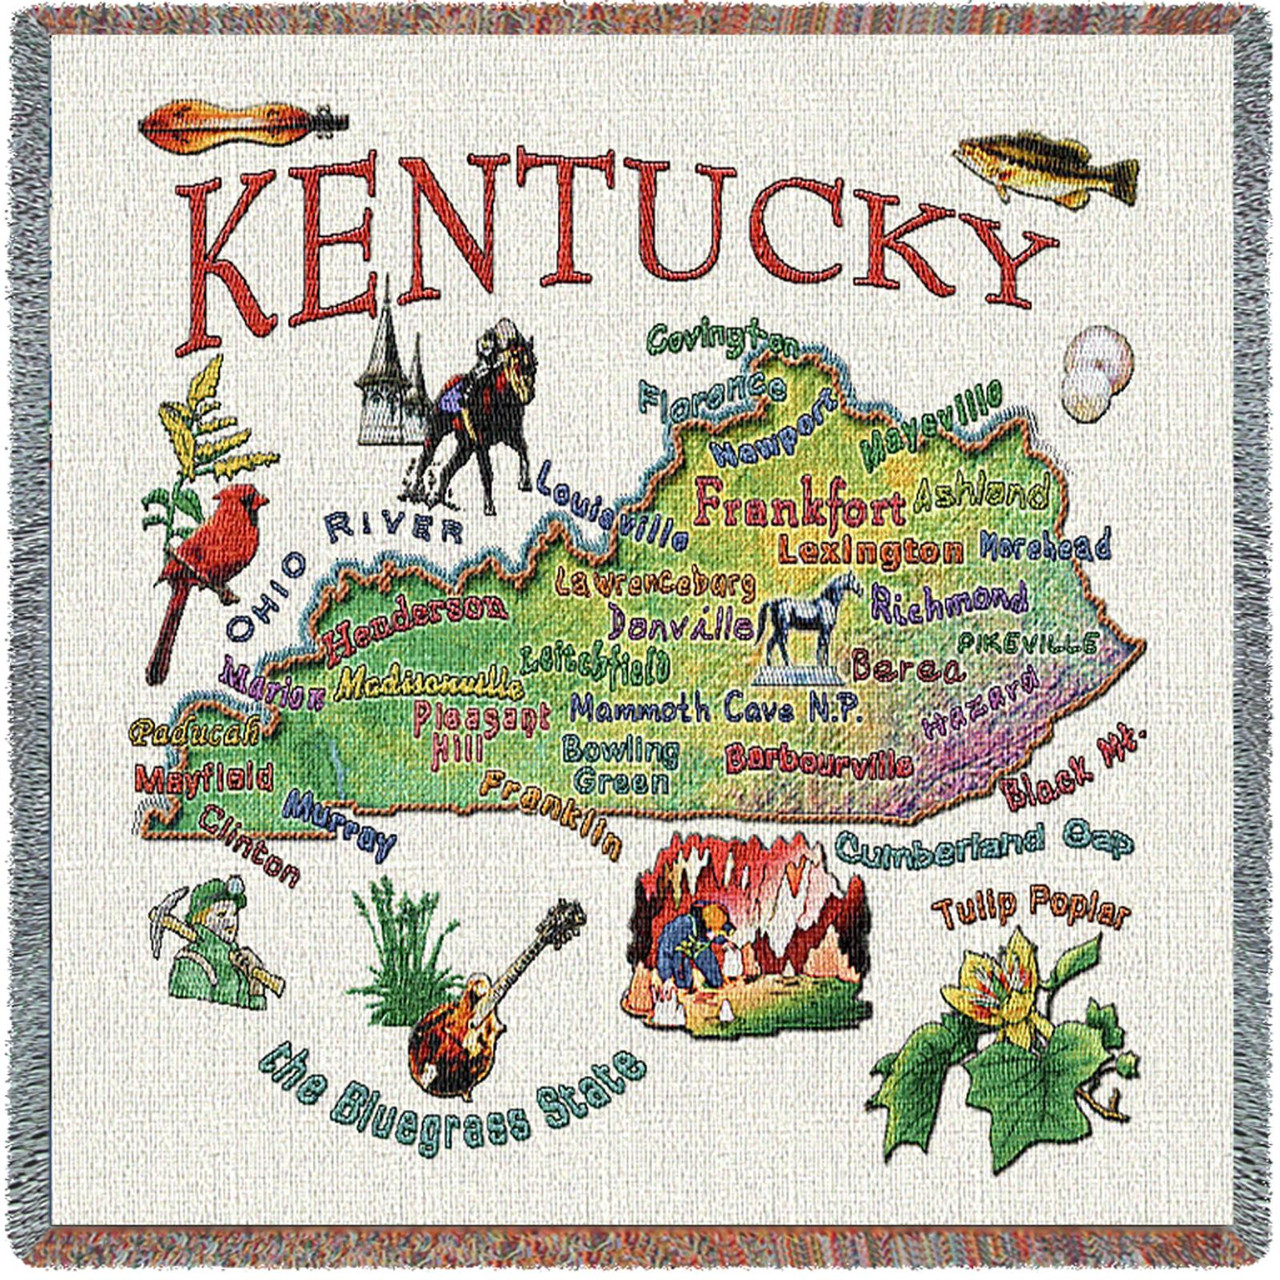 Buy Louisville City Flag Kentucky Blanket Louisville Throw Online in India  